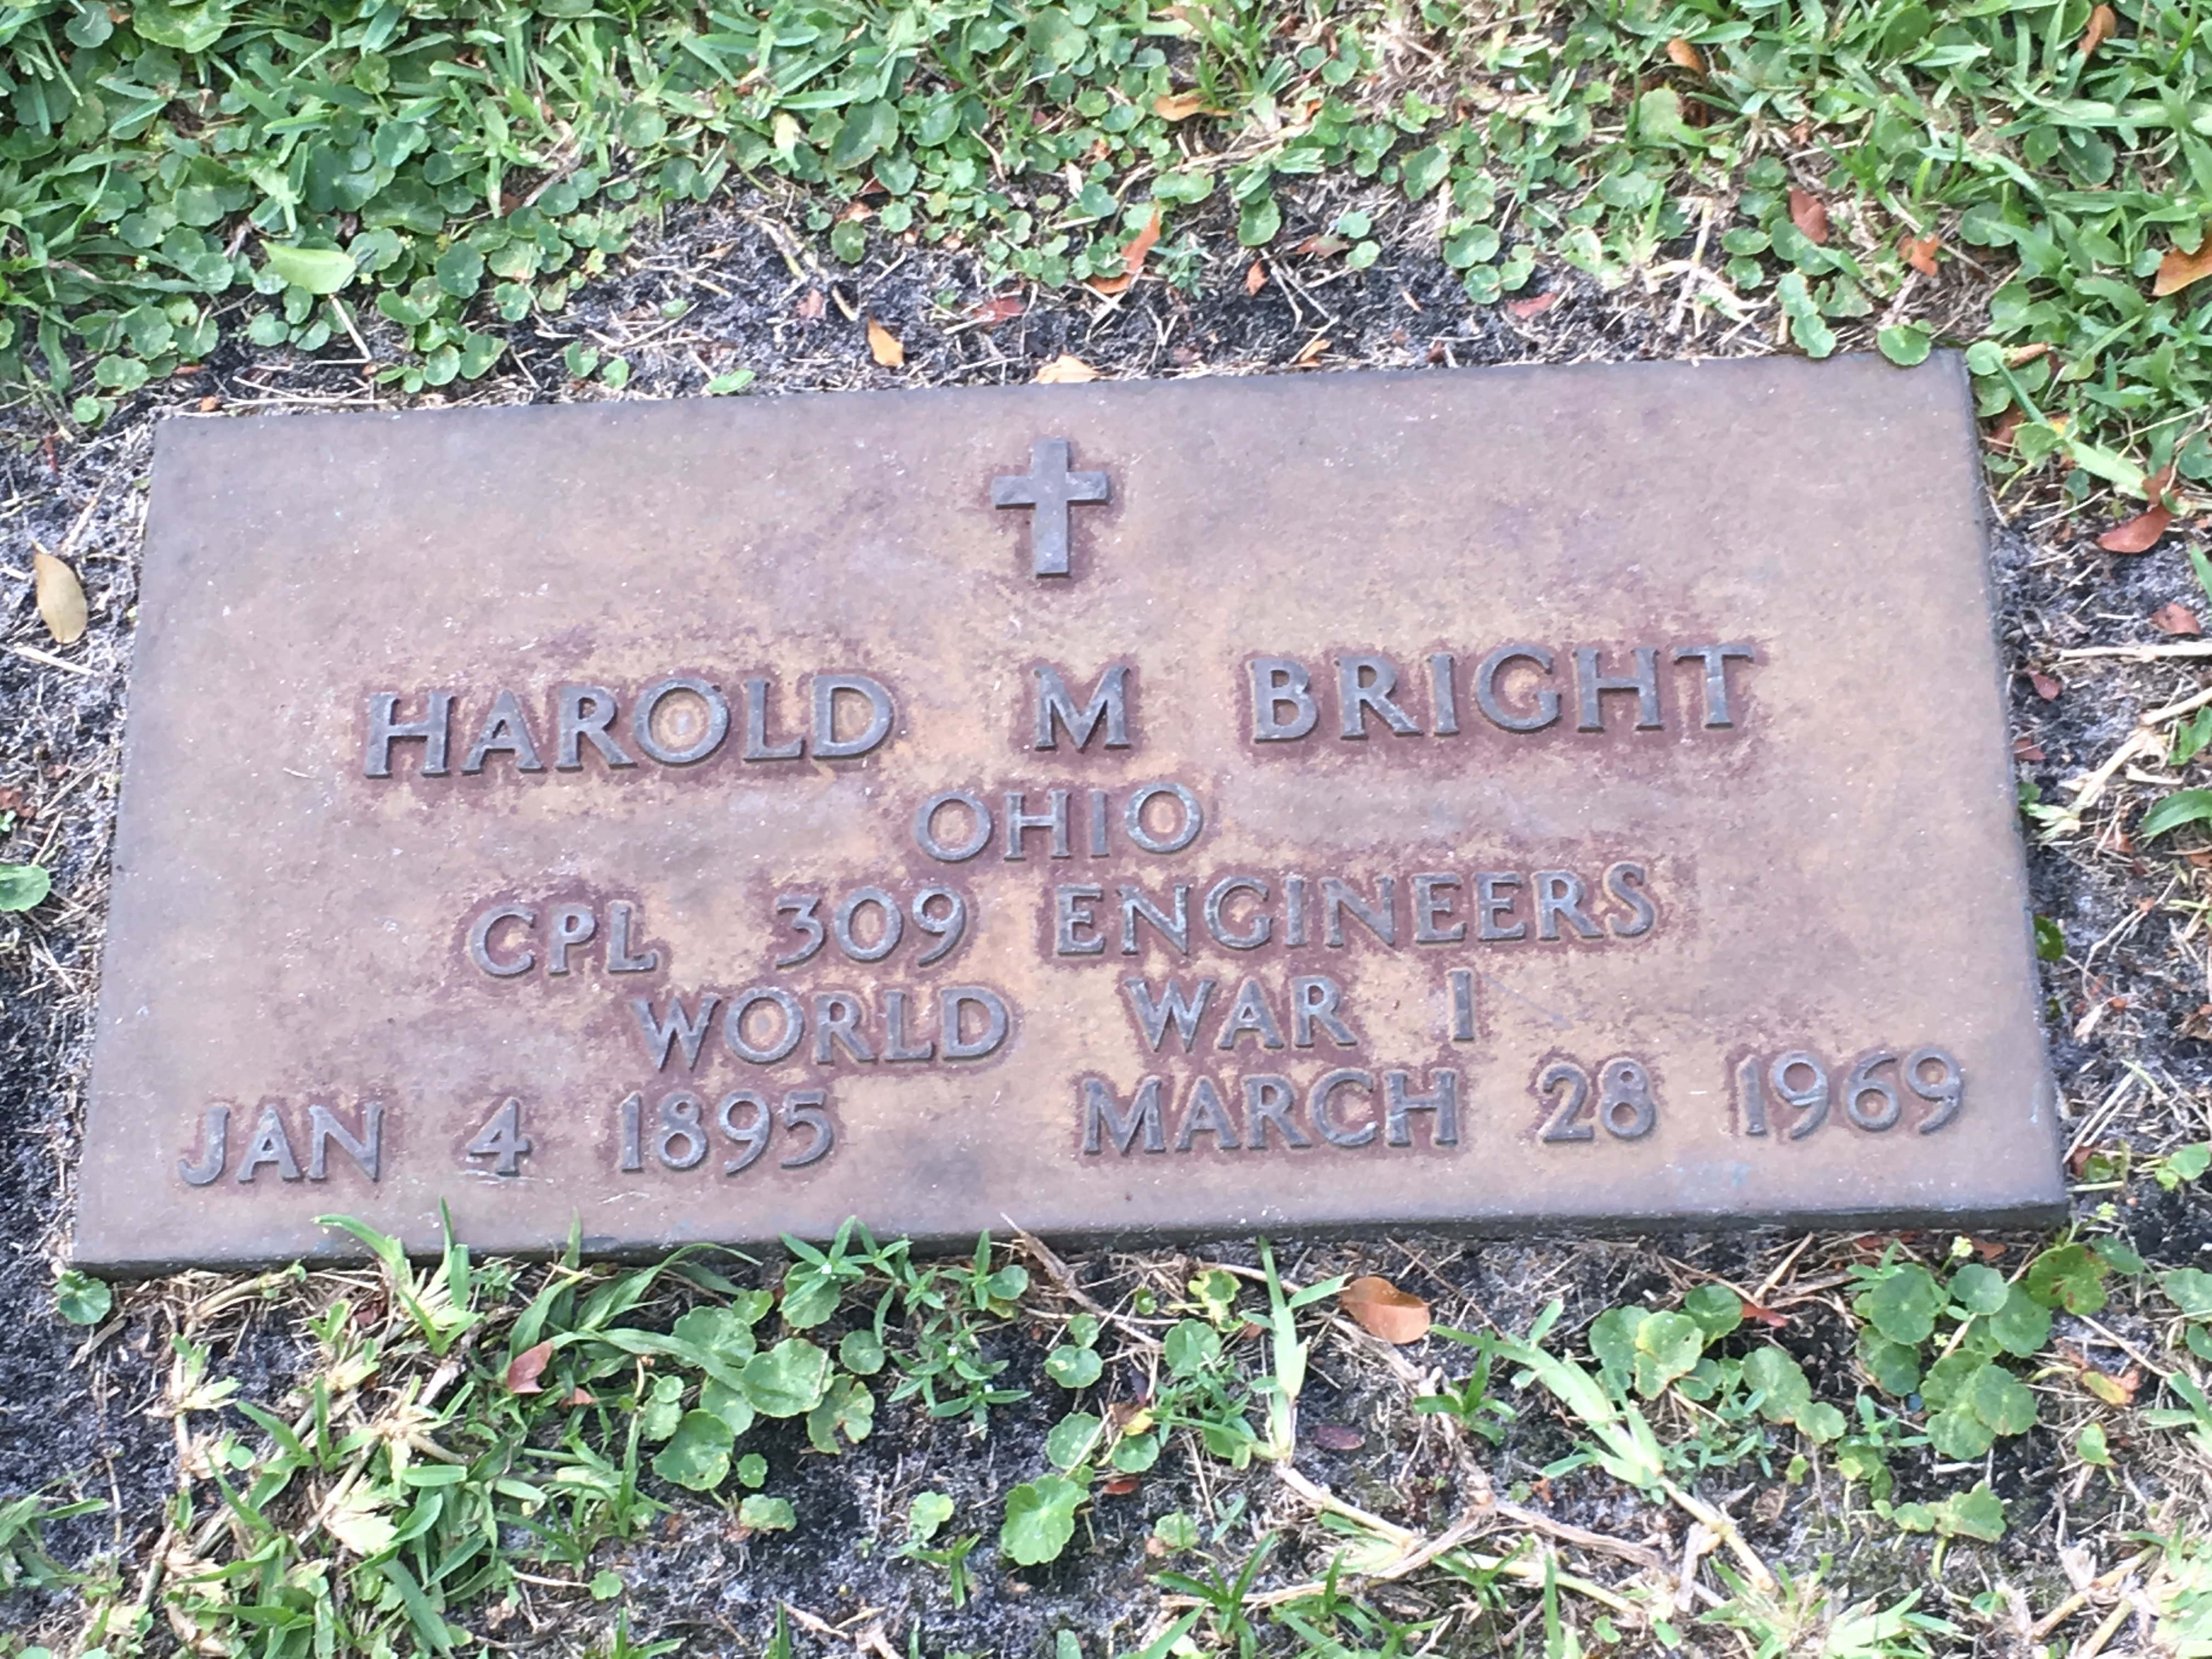 Harold M Bright